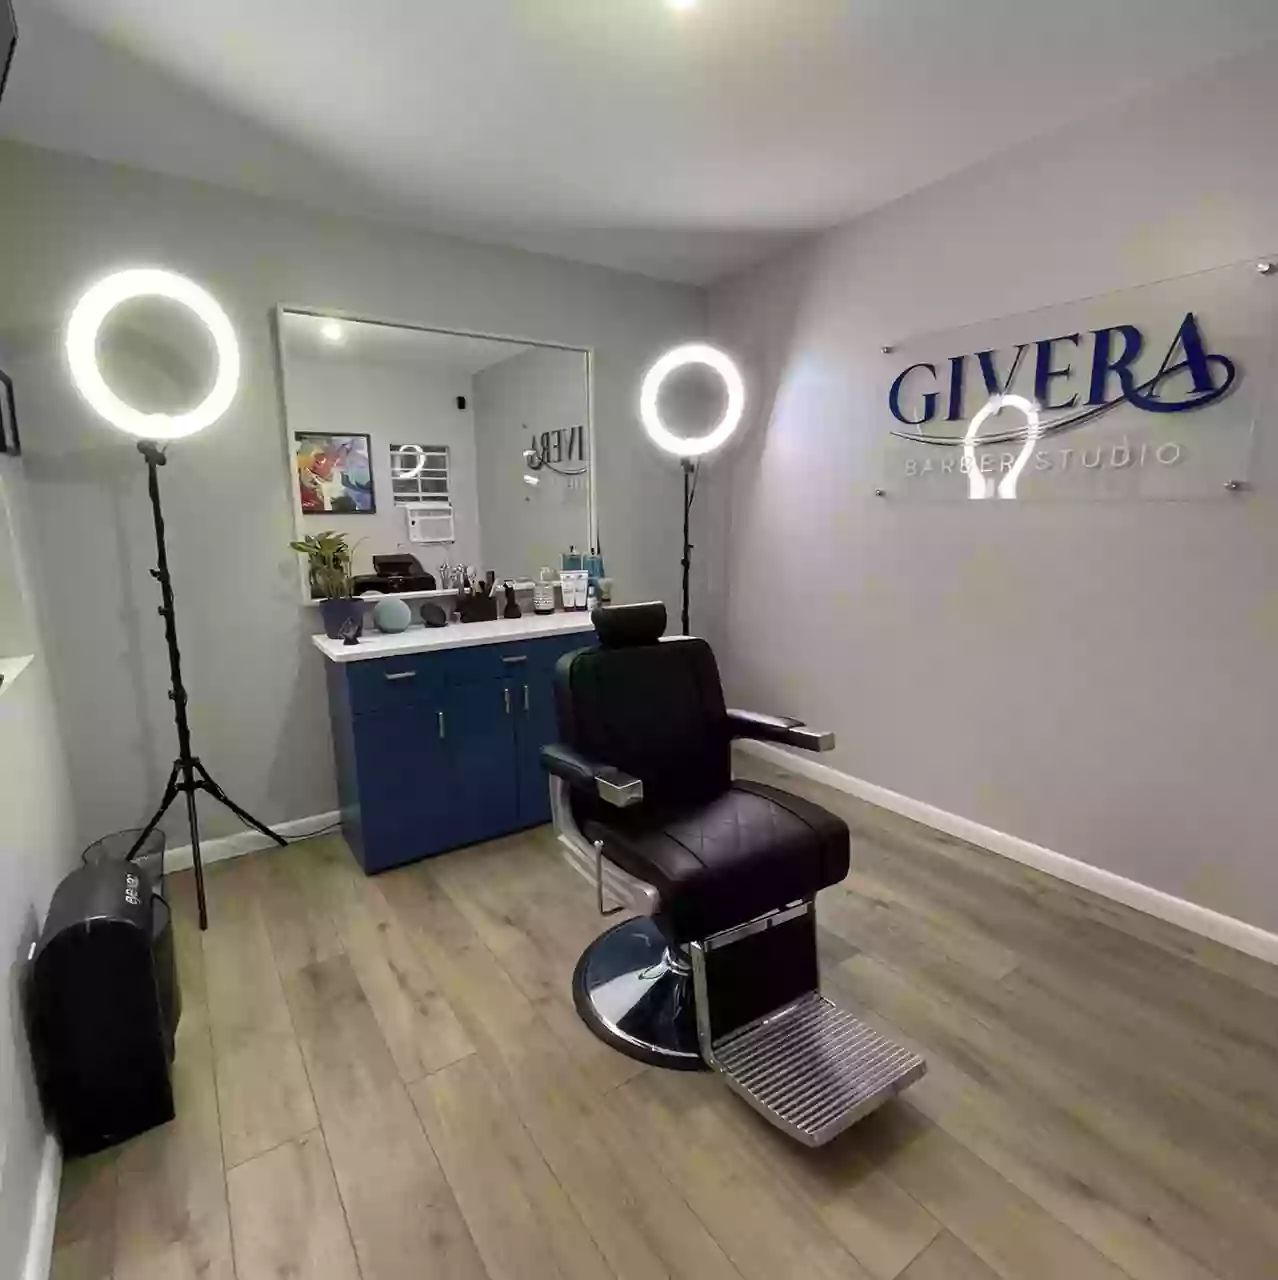 Givera Barber Studio